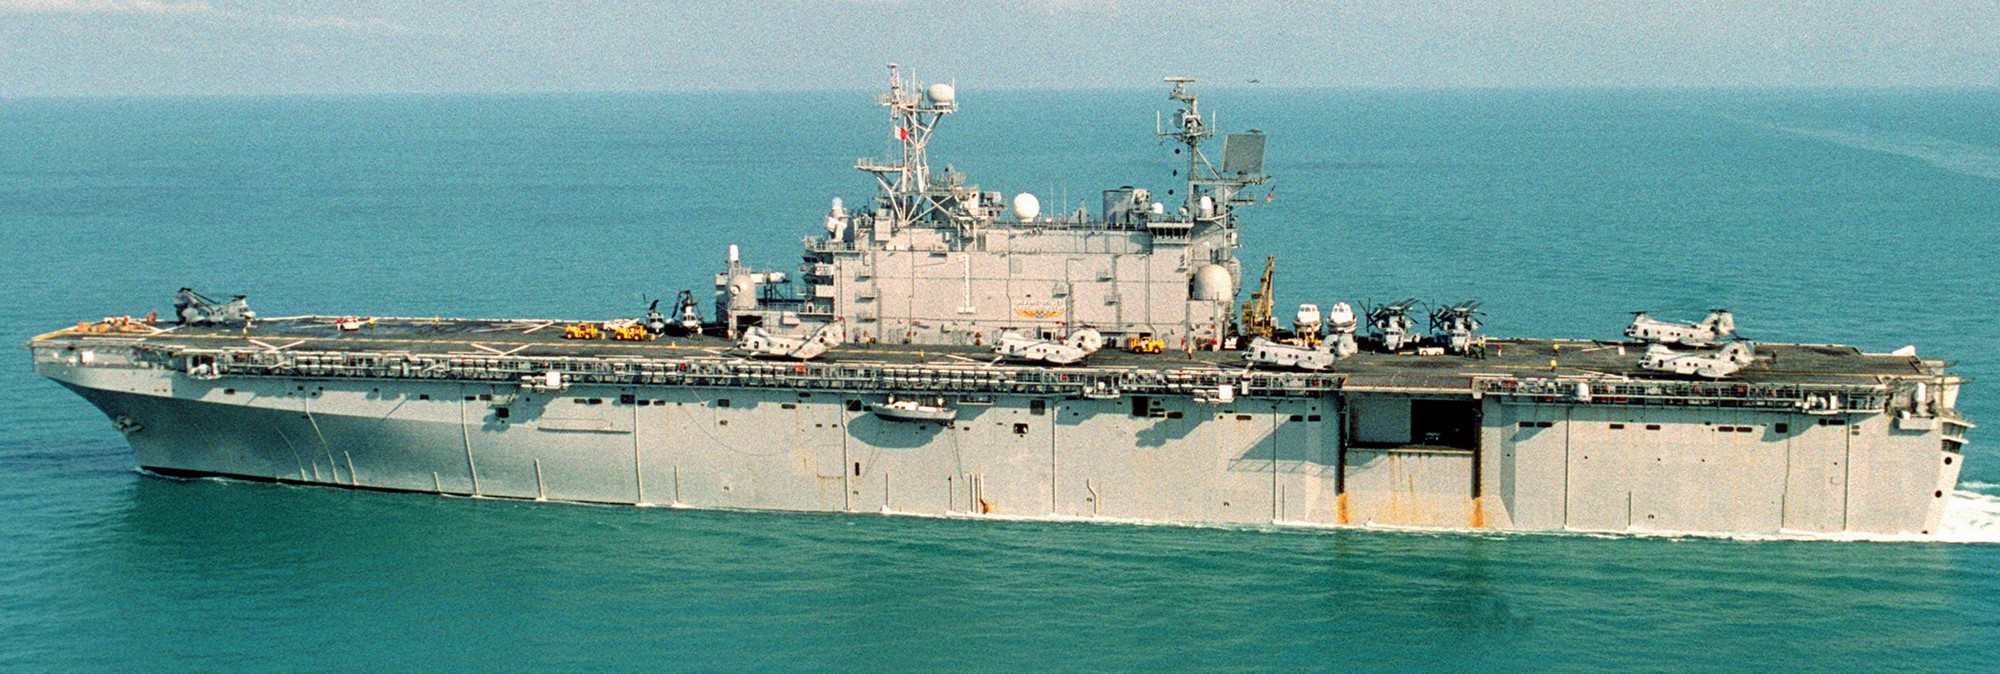 lha-1 uss tarawa amphibious assault ship us navy 13th meu soc marines hmm-161 rein 03